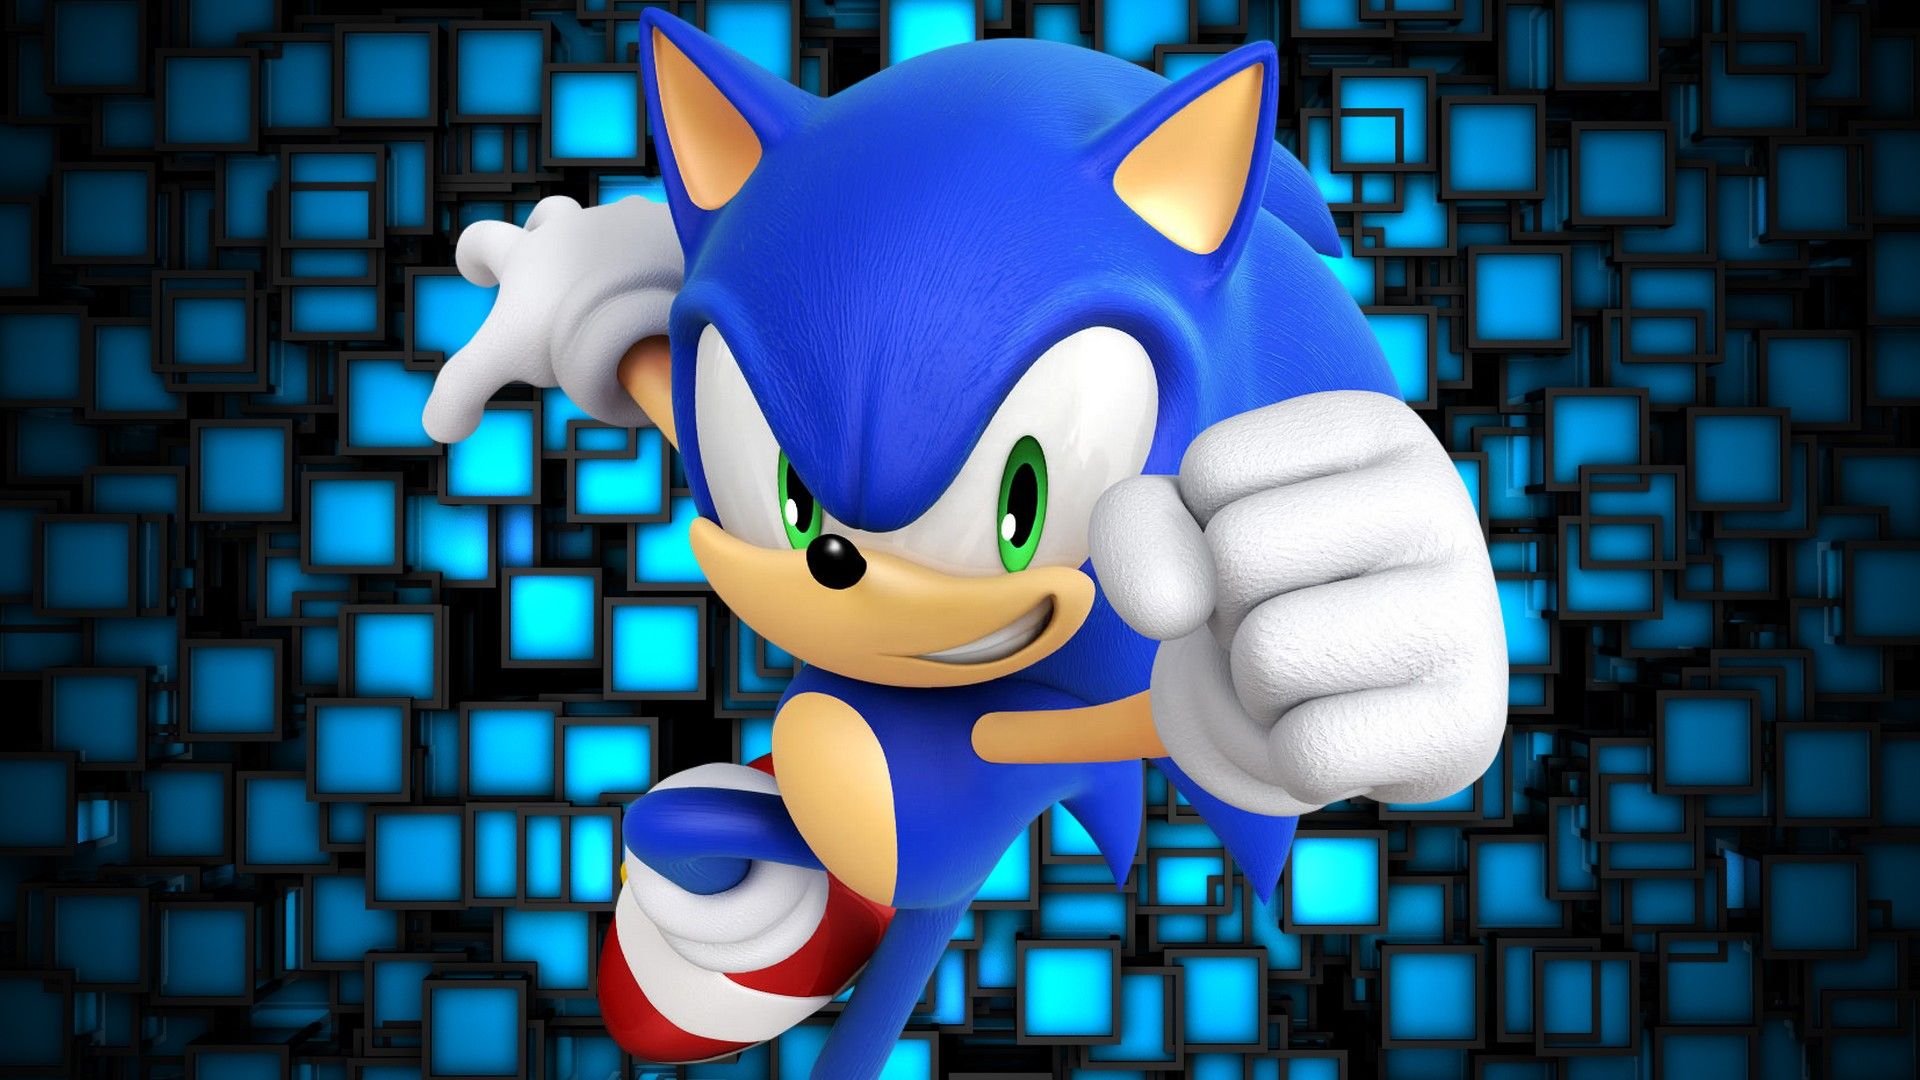 Fantastic Sonic The Hedgehog Picture HD Wallpaper Pack v.86